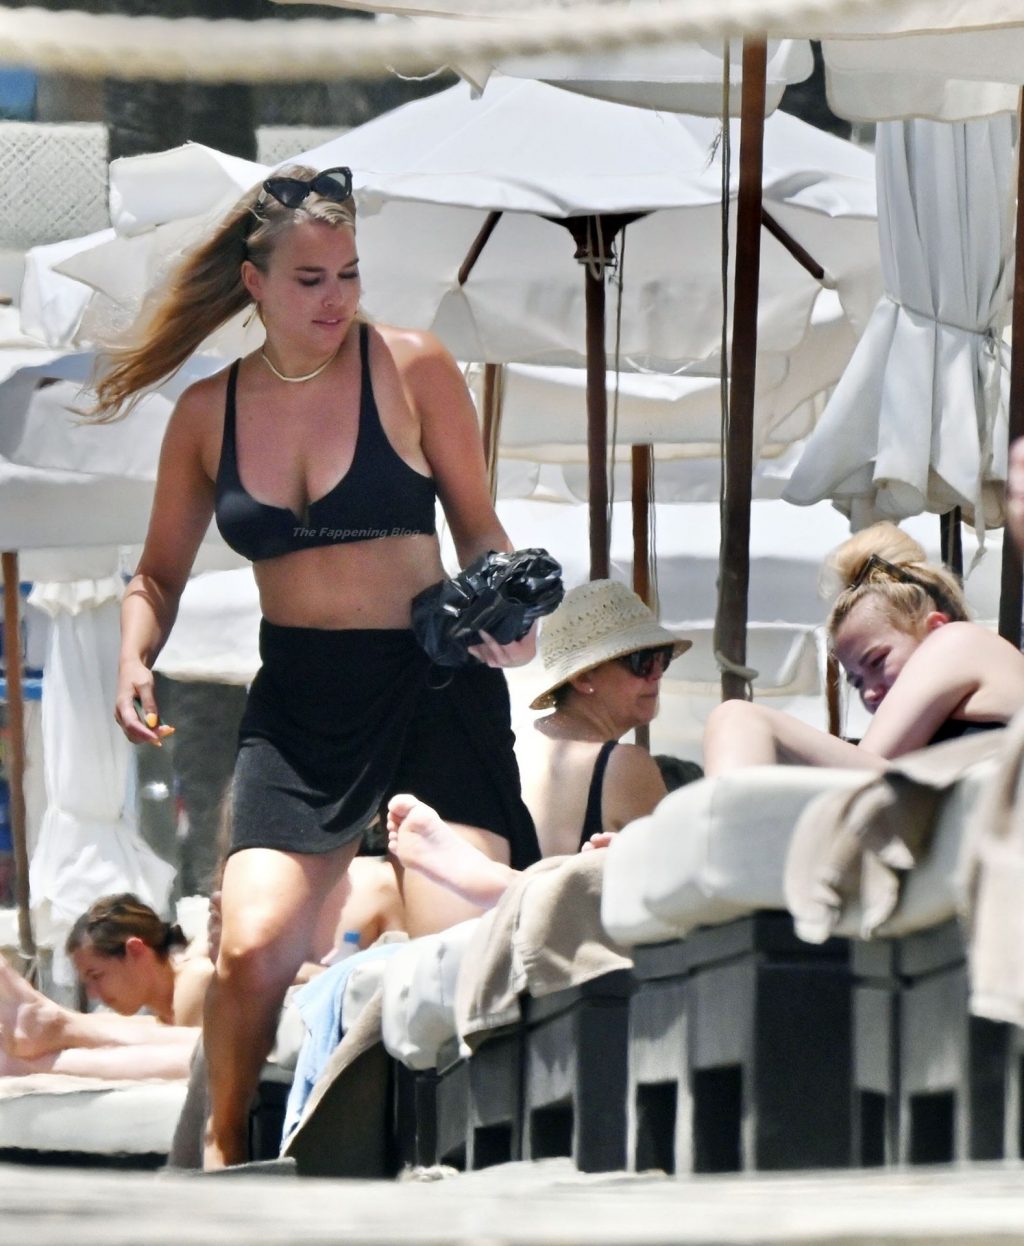 Sara Sieppi Shows Off Her Beach Body in a Black Bikini on Her Holiday in Spain (69 Photos)